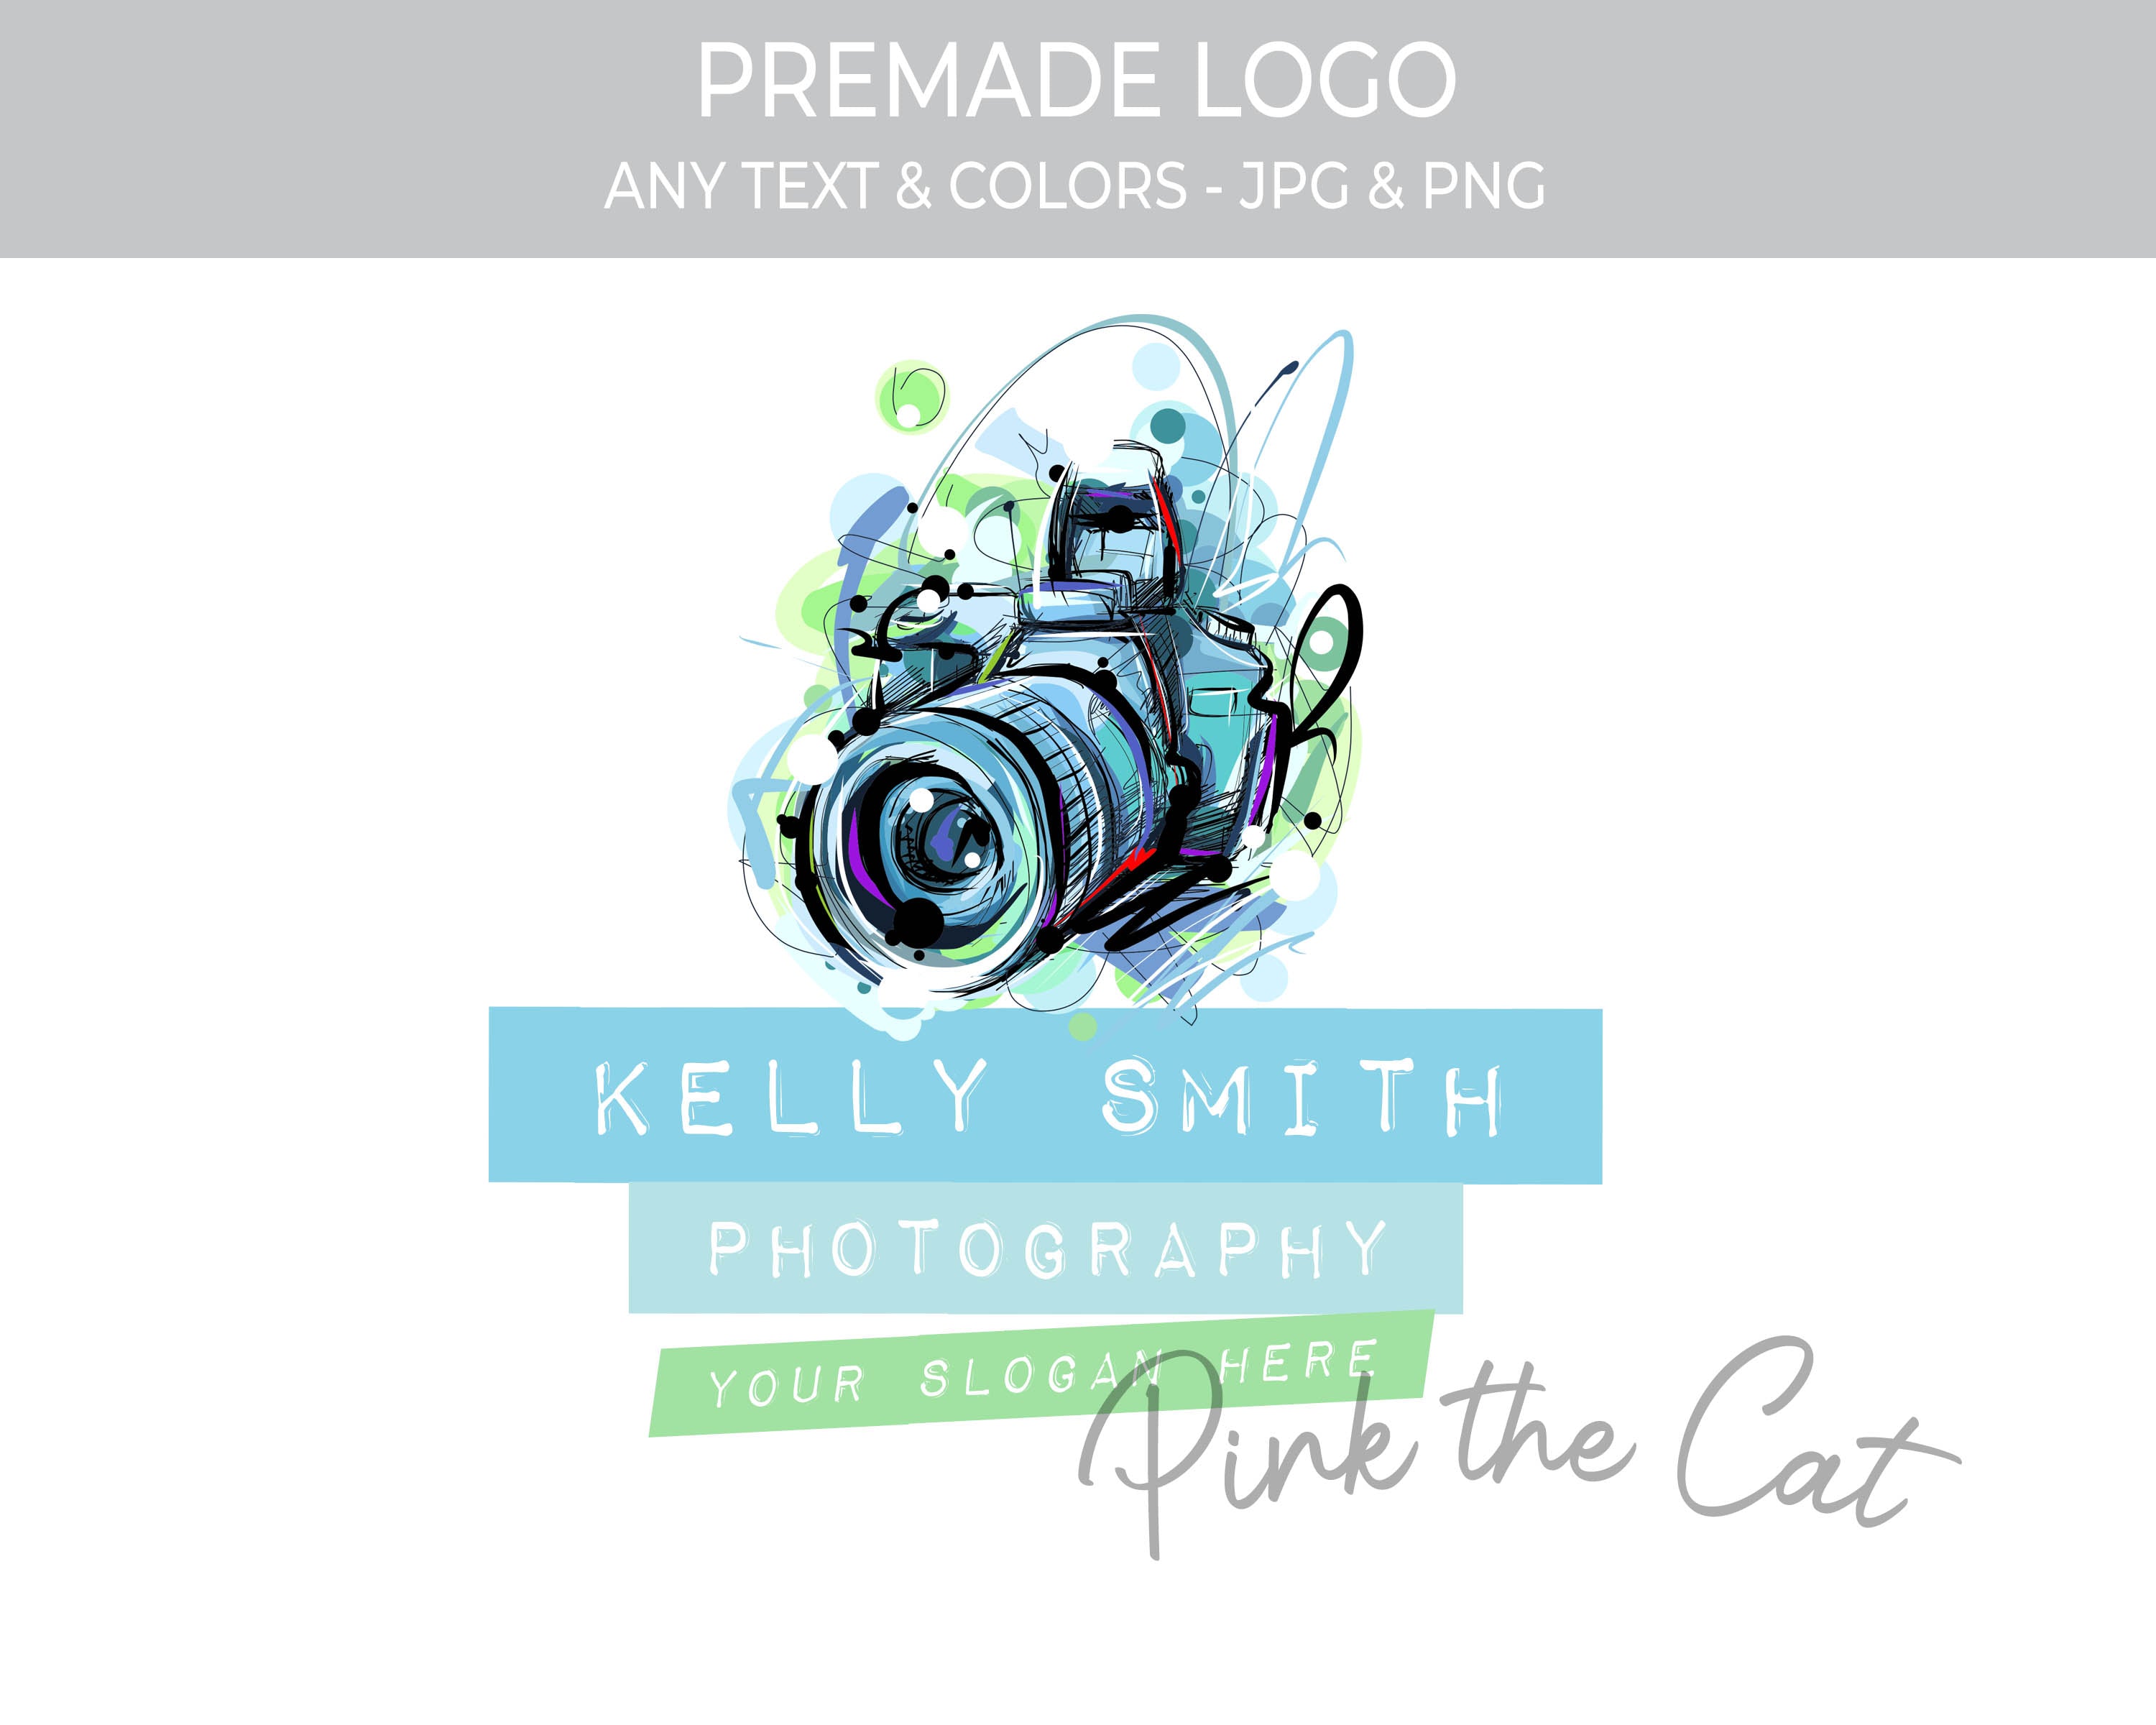 Premade modern photography logo design